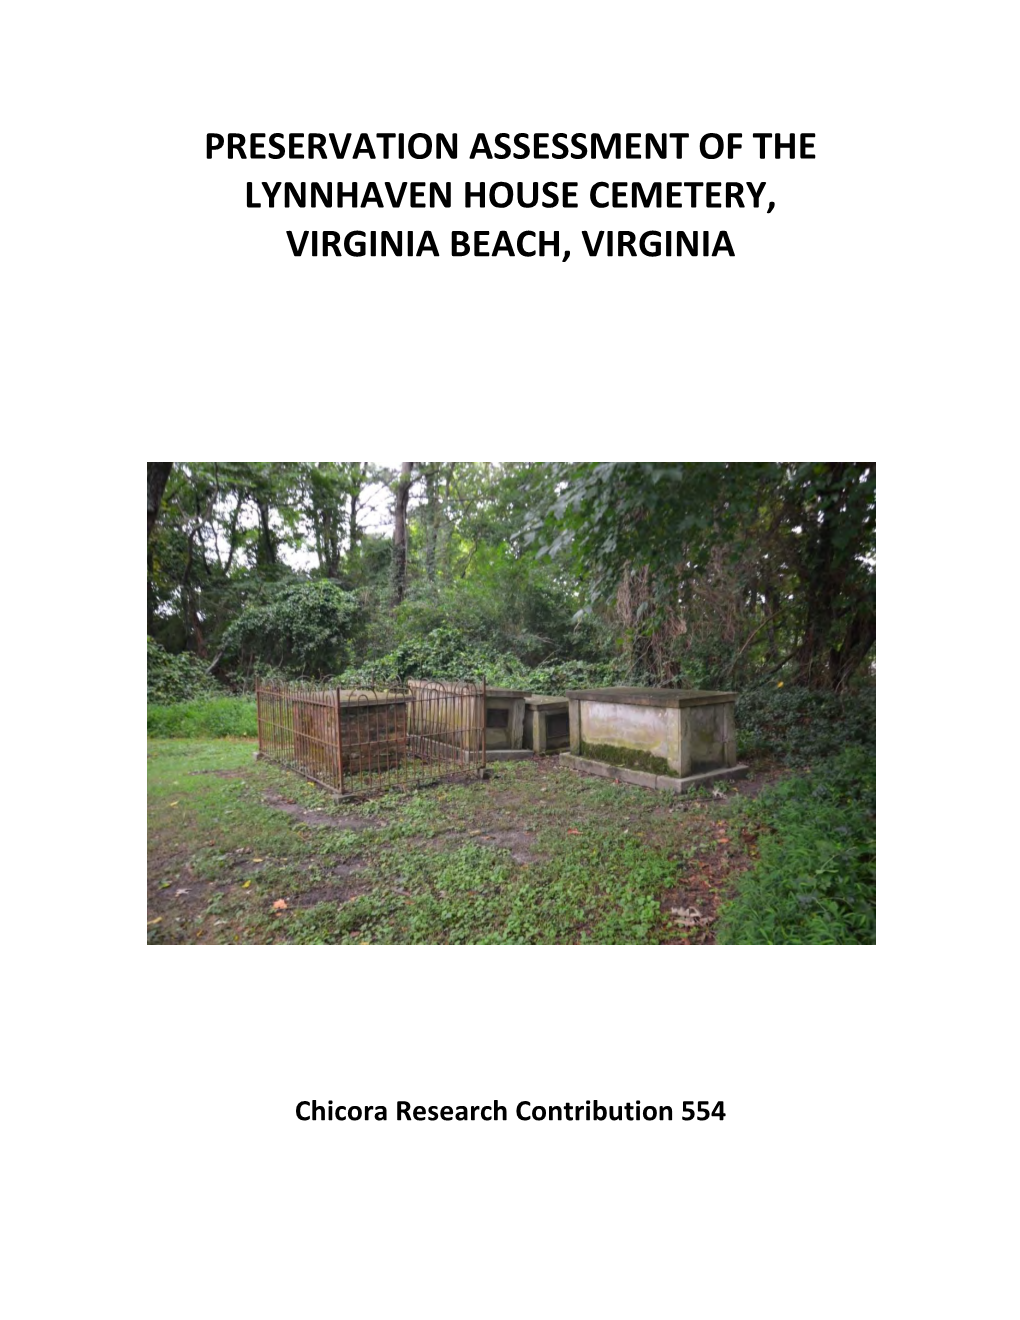 Preservation Assessment of the Lynnhaven House Cemetery, Virginia Beach, Virginia